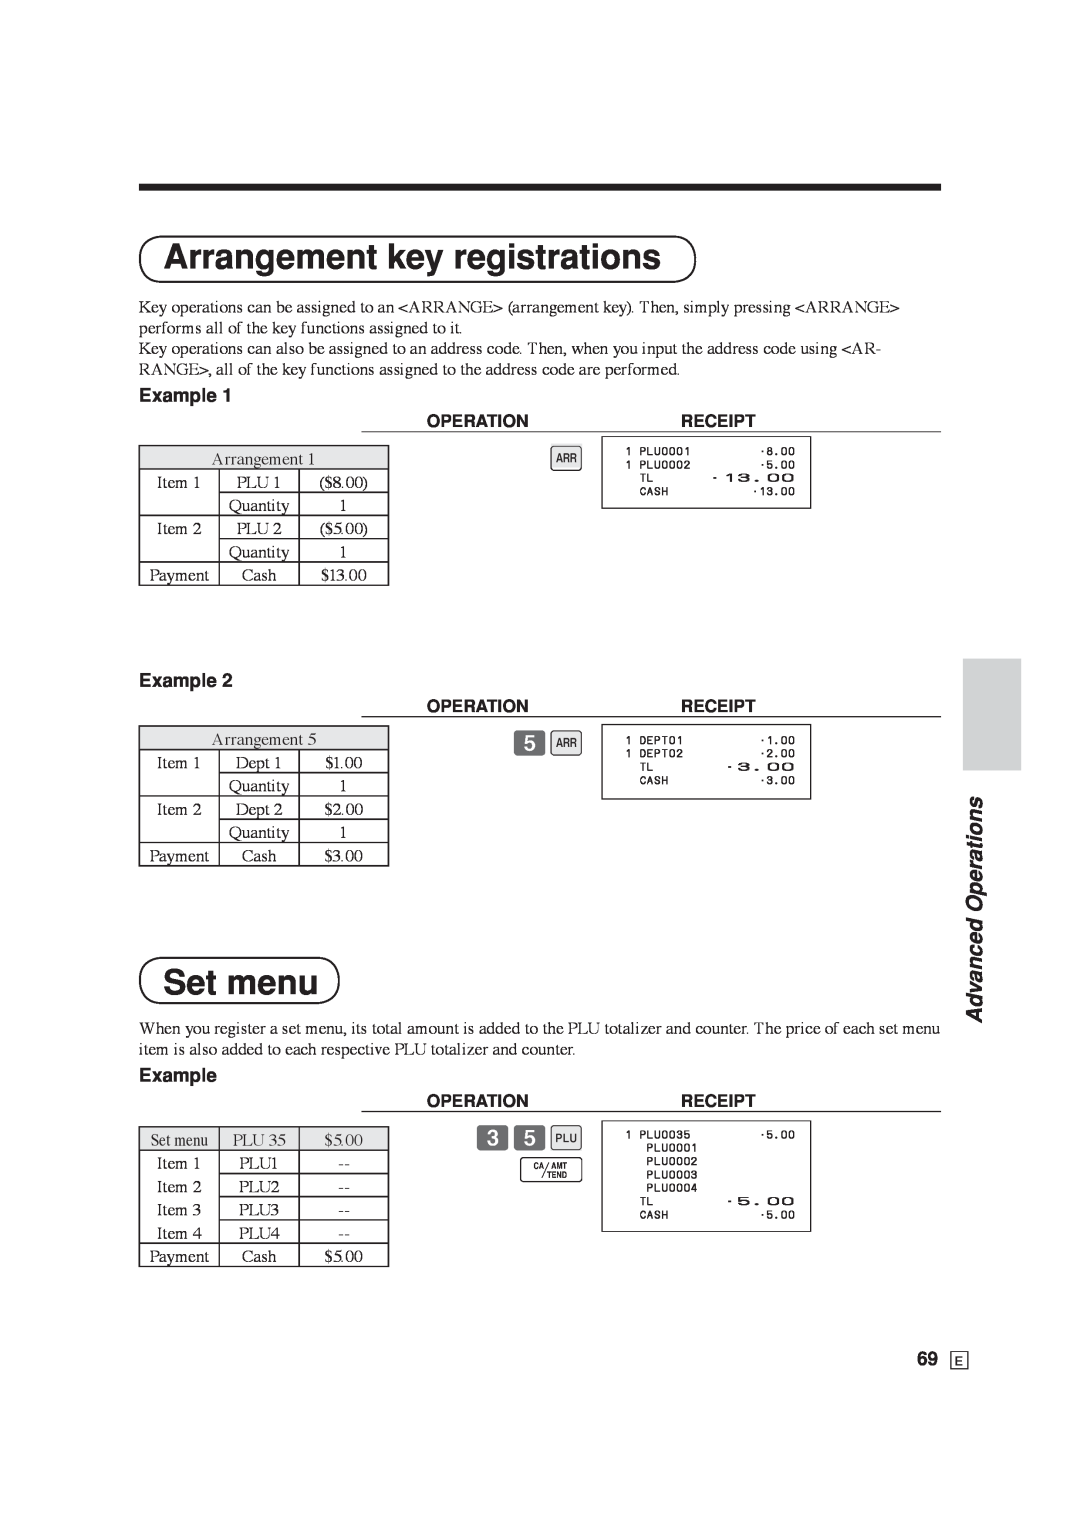 Casio SE-C6000, SE-S6000 user manual Arrangement key registrations, Set menu, Advanced, 69 E, Operations, Example 